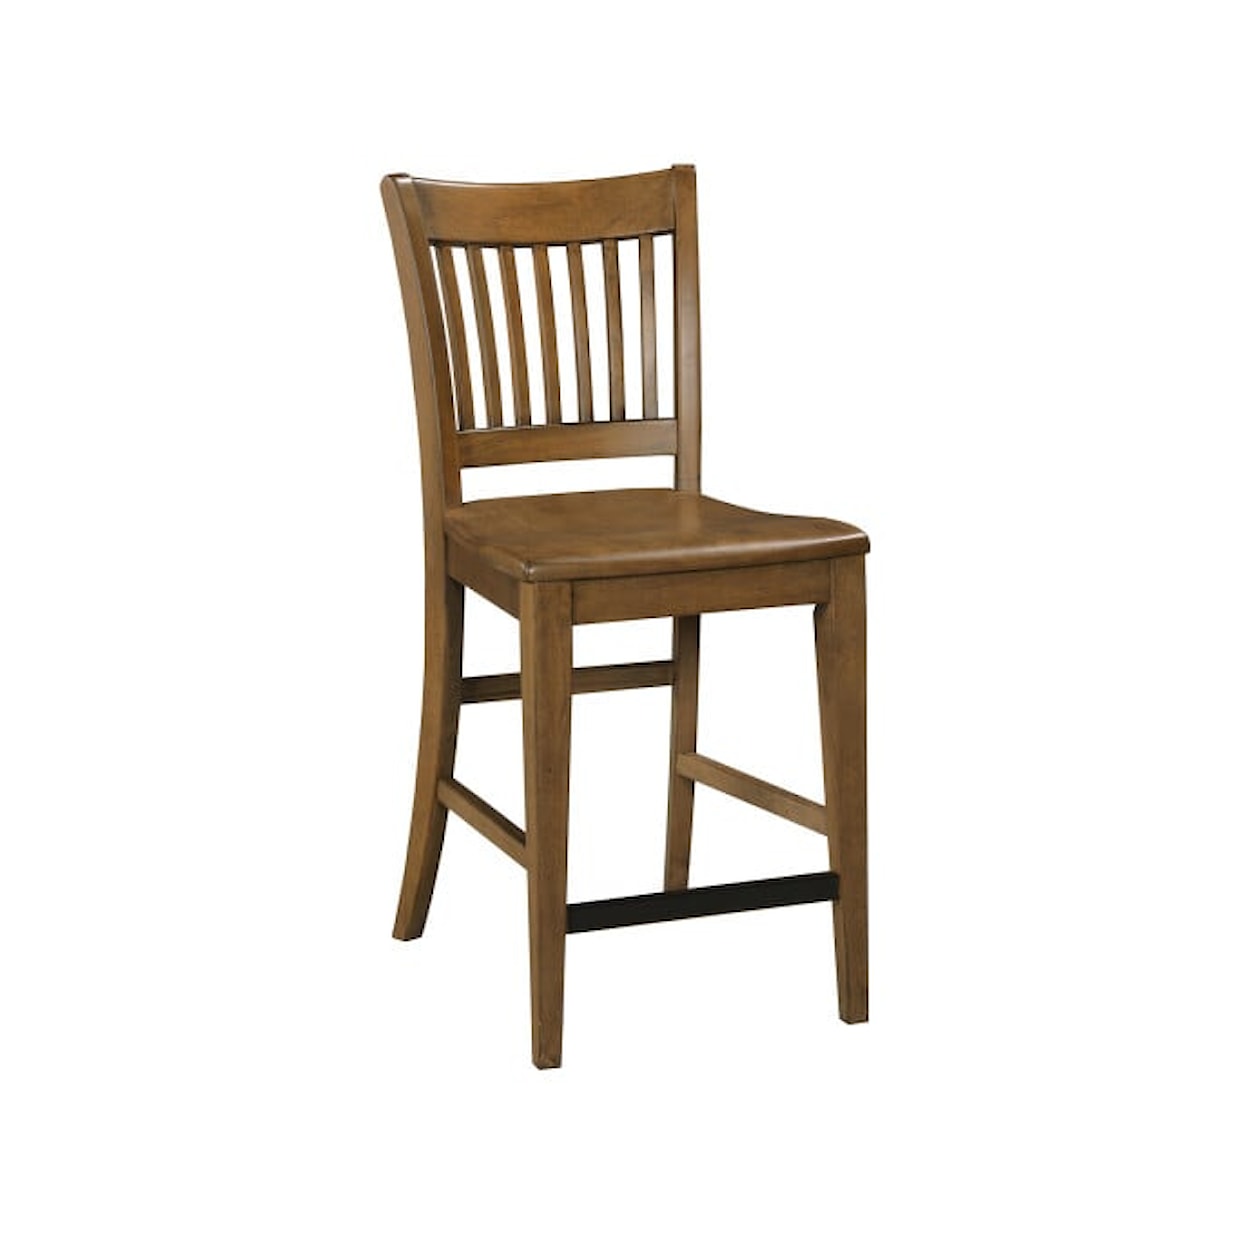 Kincaid Furniture Kafe' Tall Rake Back Chair, Latte